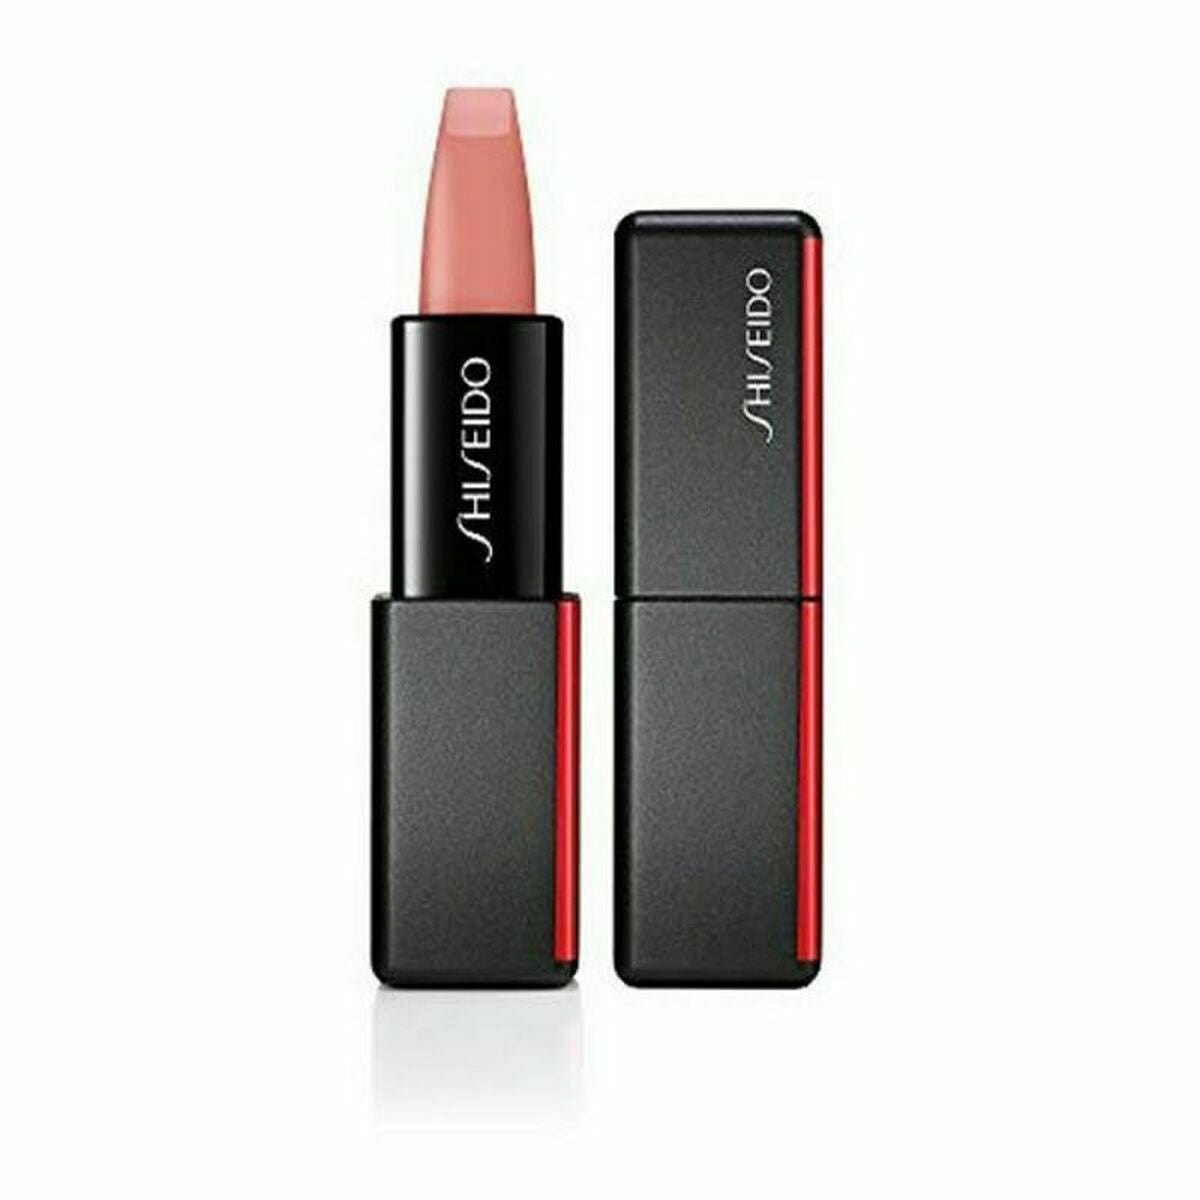 Leppestift modernmatte pulver shiseido 4 g